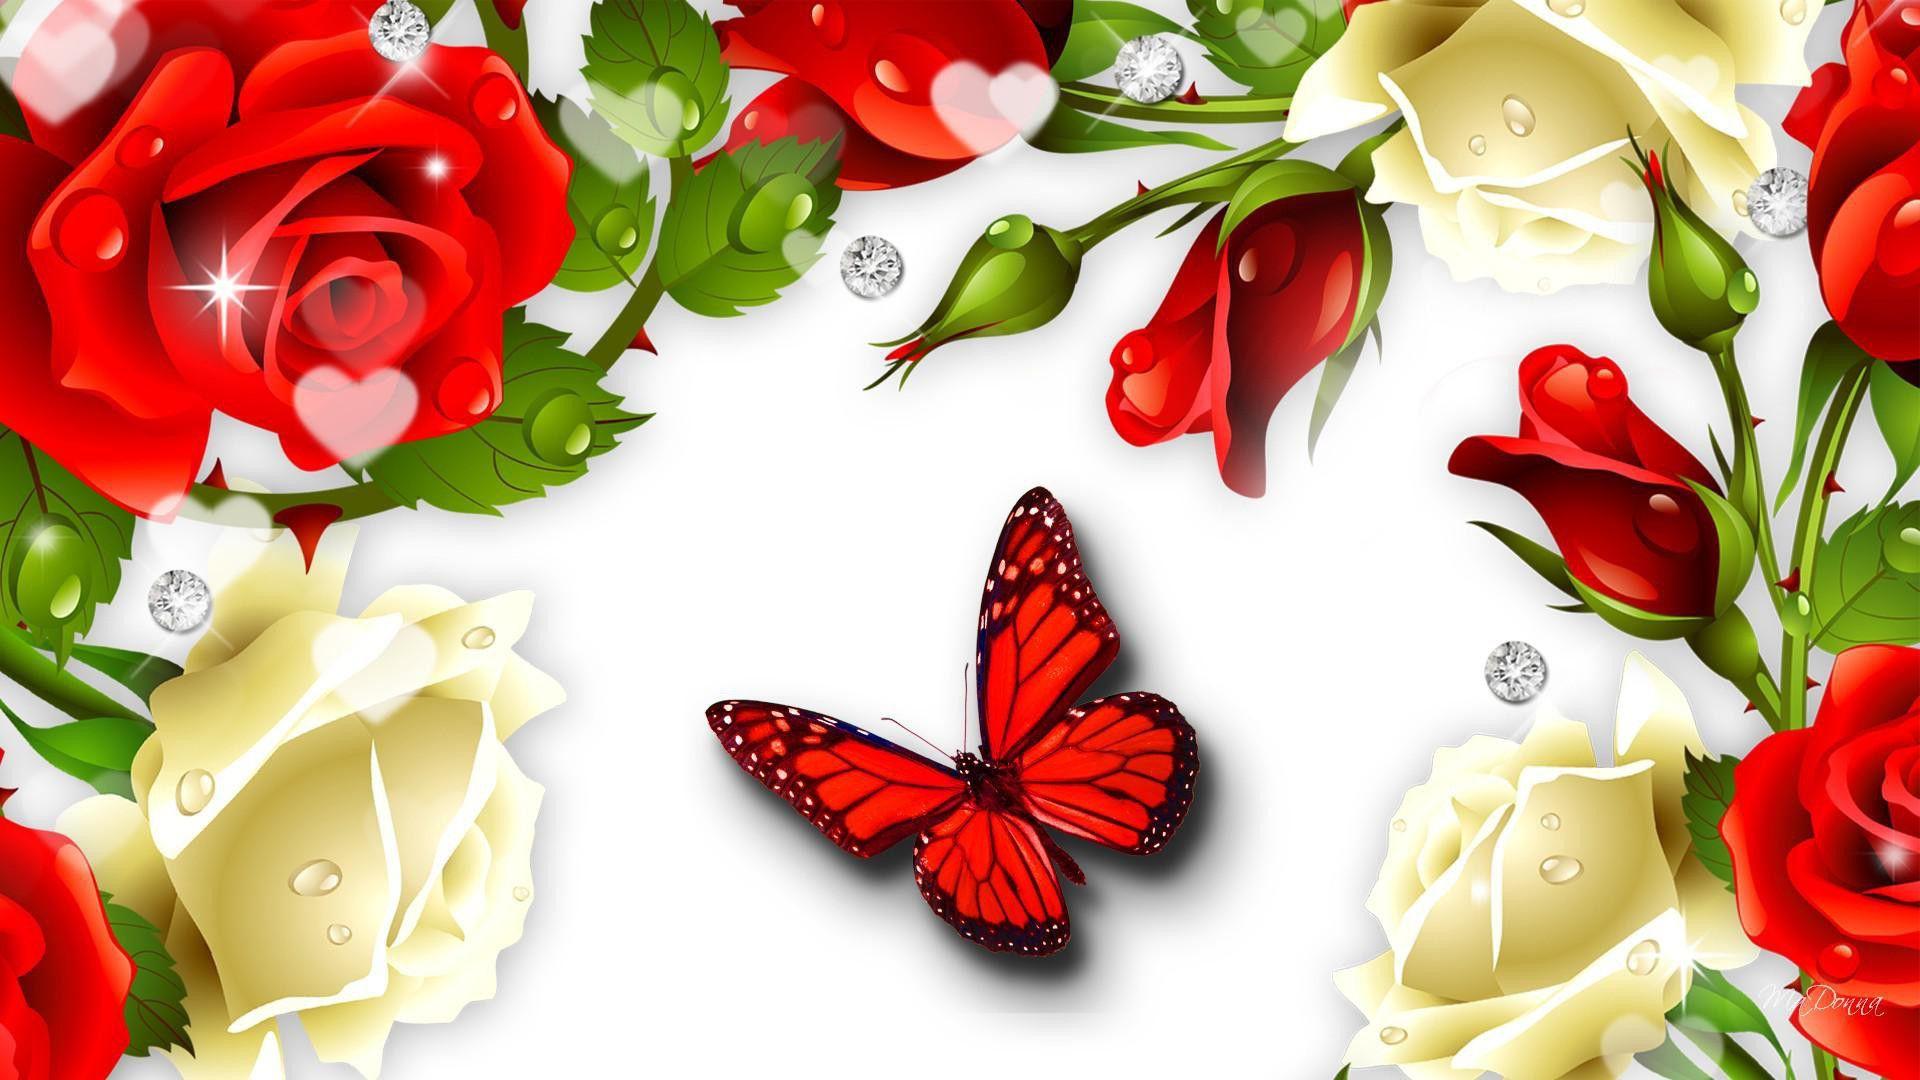 red butterflies   Butterfly background Poster background design Butterfly  wallpaper